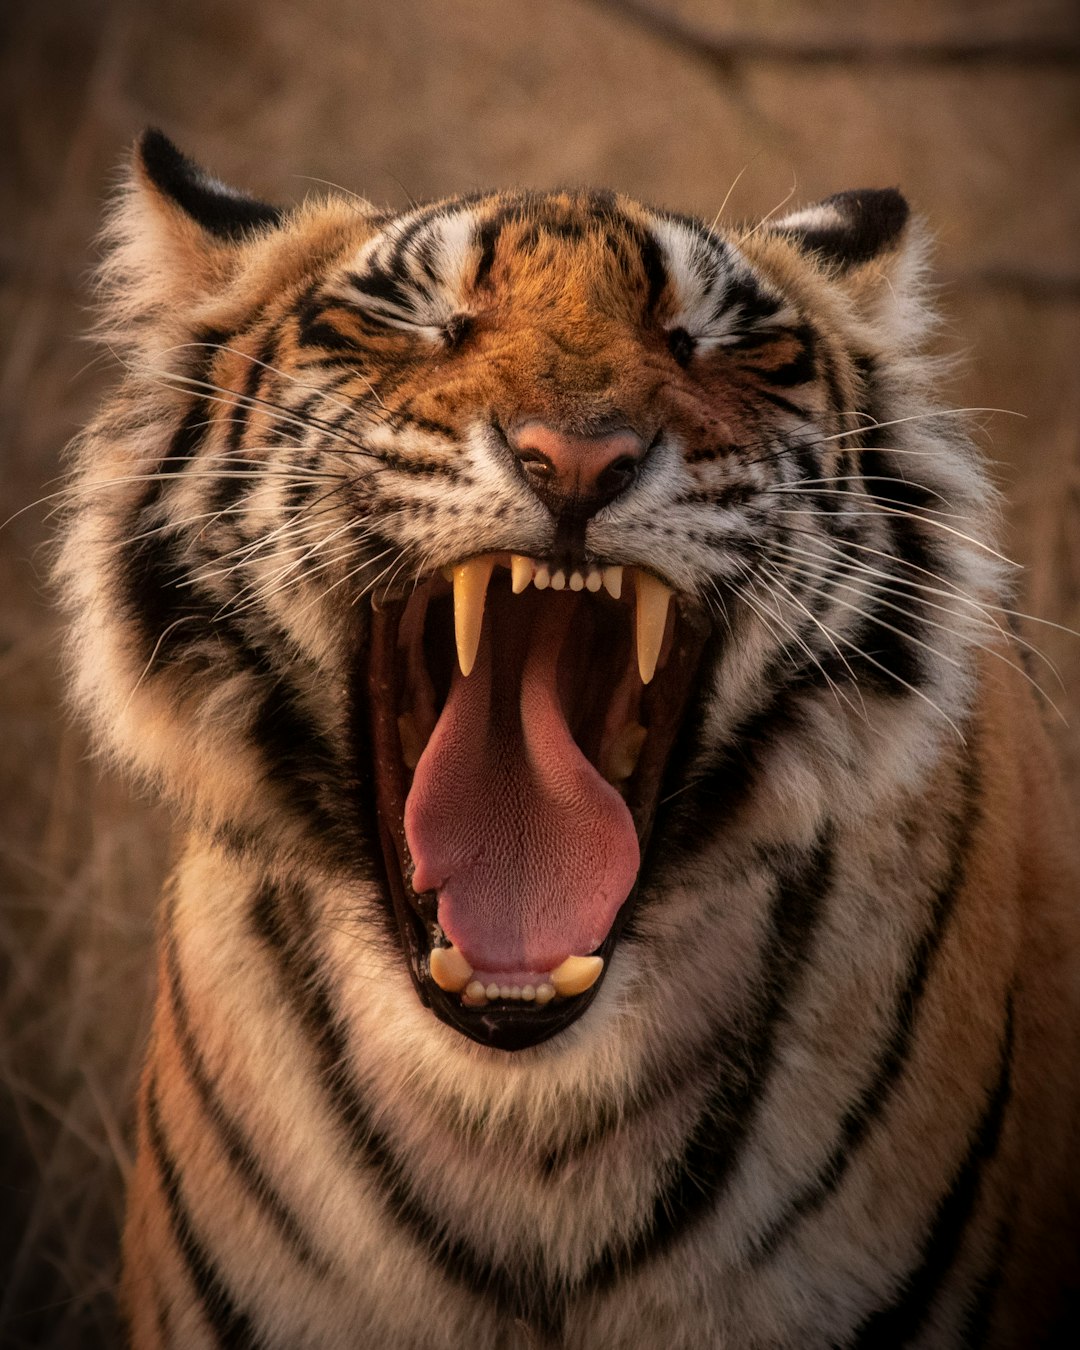  brown and black tiger showing tongue tiger